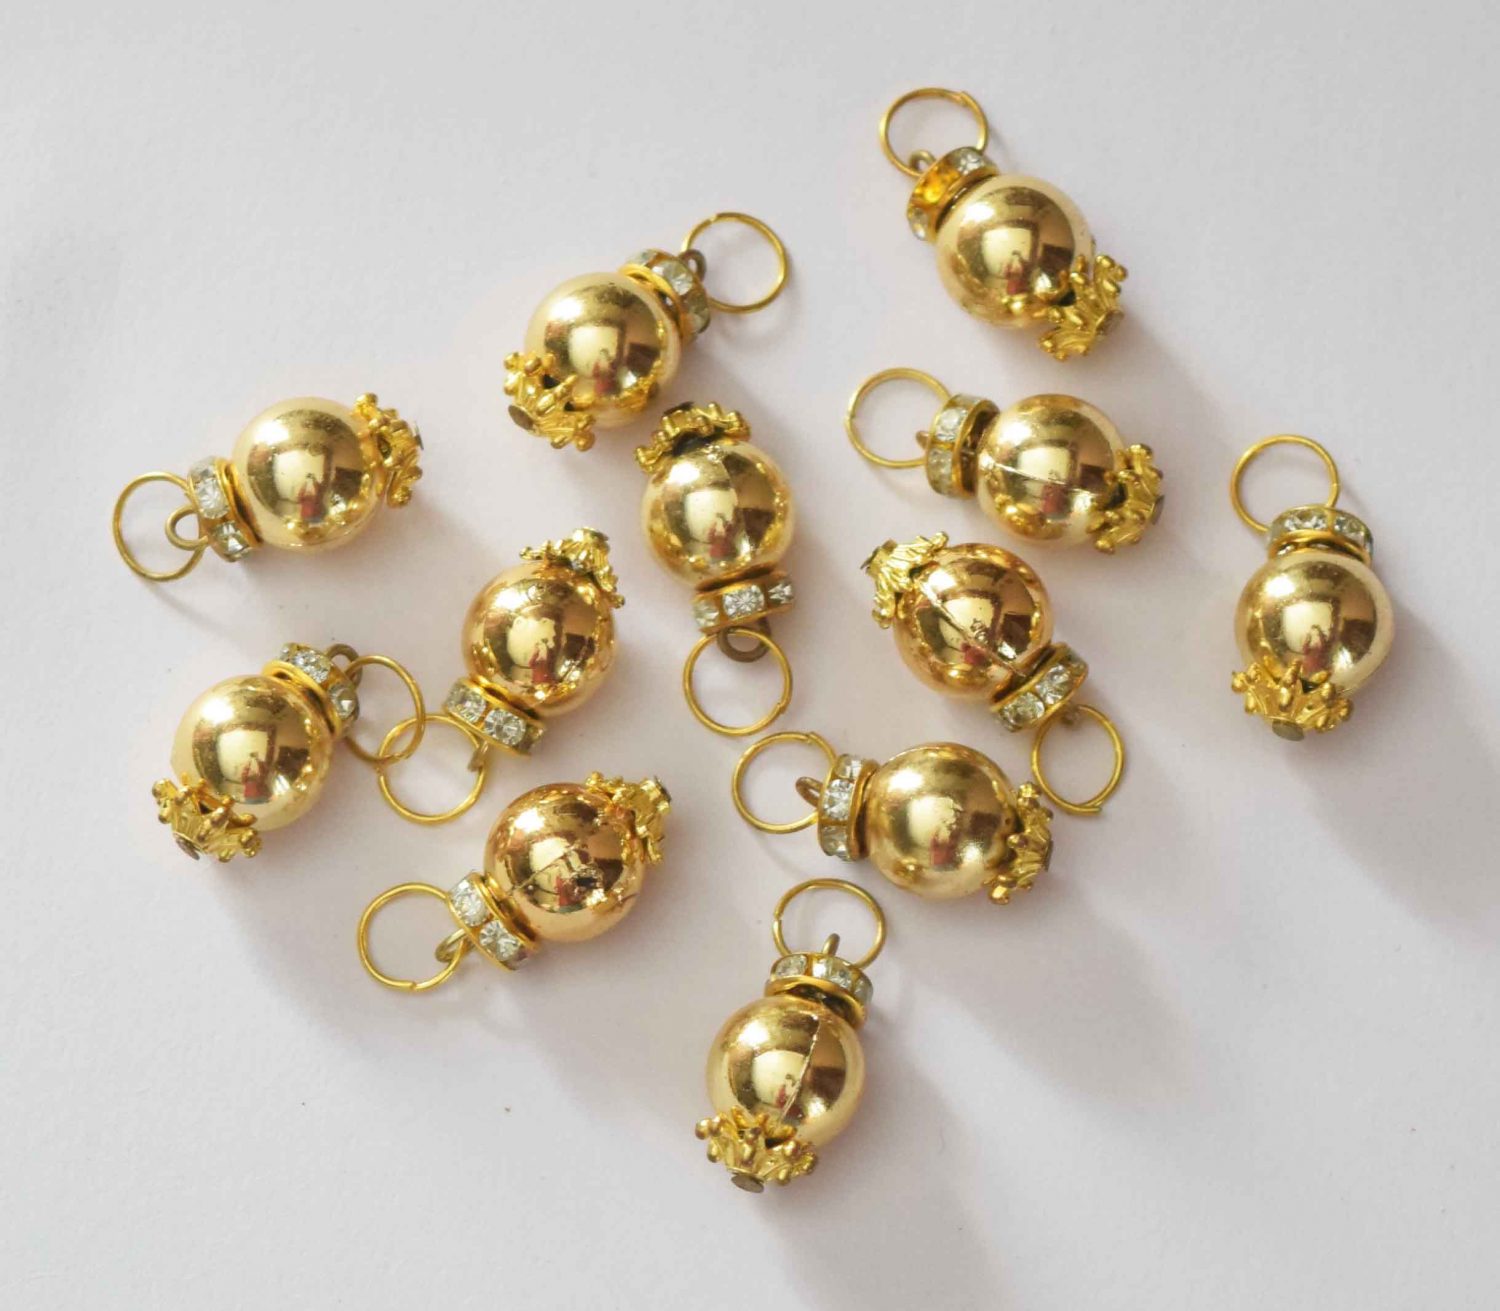 12 Pieces Lot of 2cm size Golden Ball Latkan Dangles LK083 1